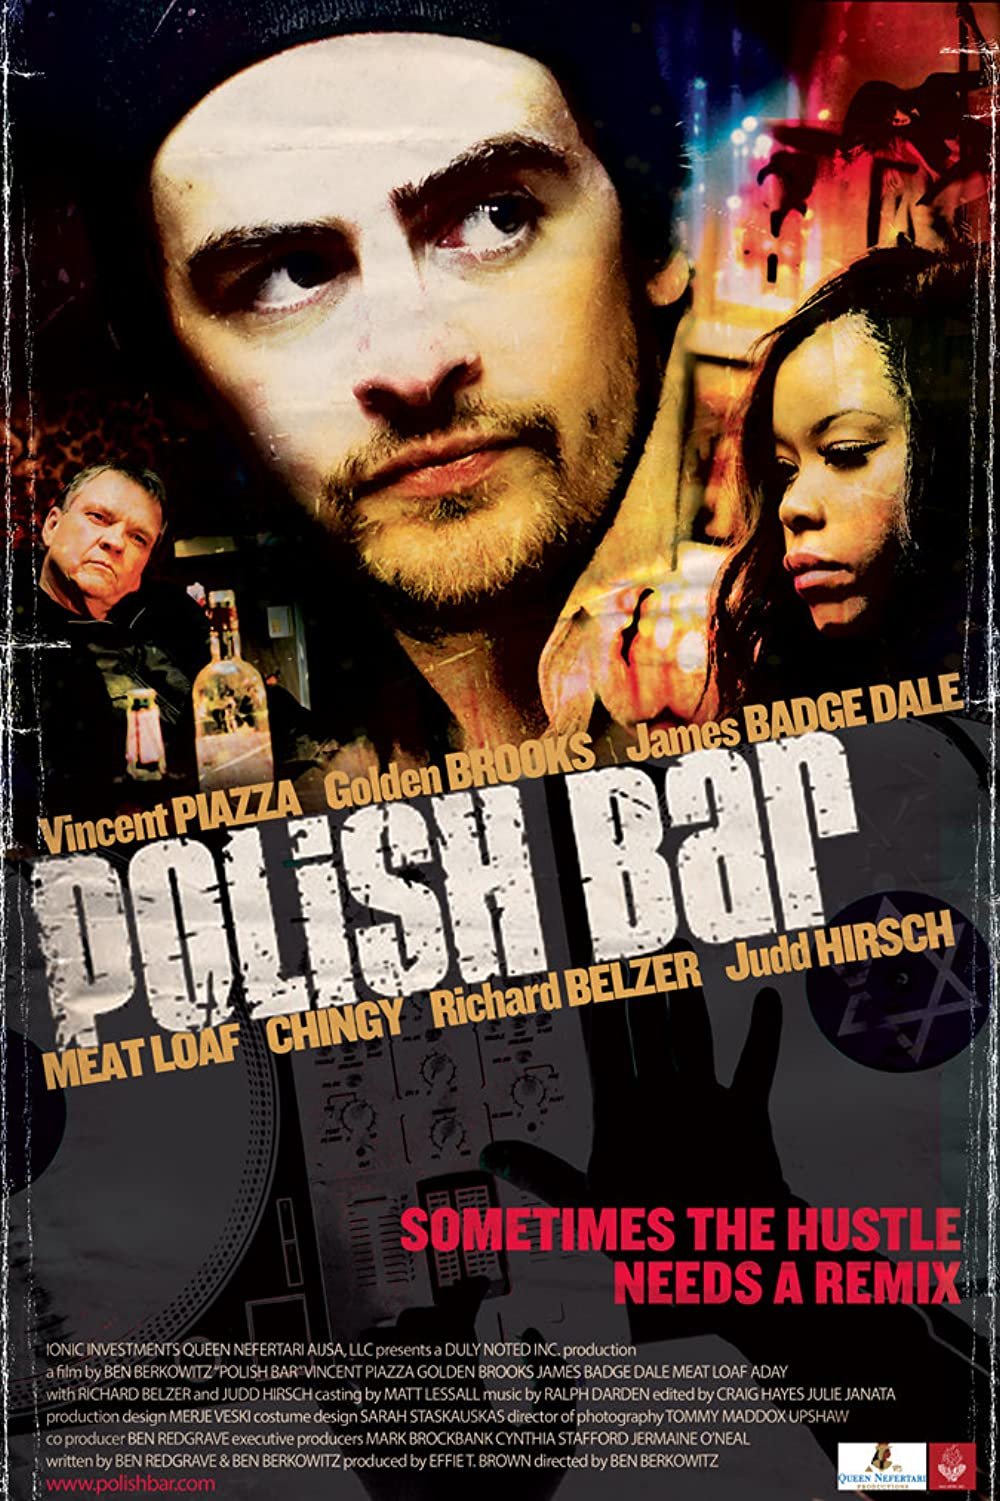 The Polish Bar poster.jpg